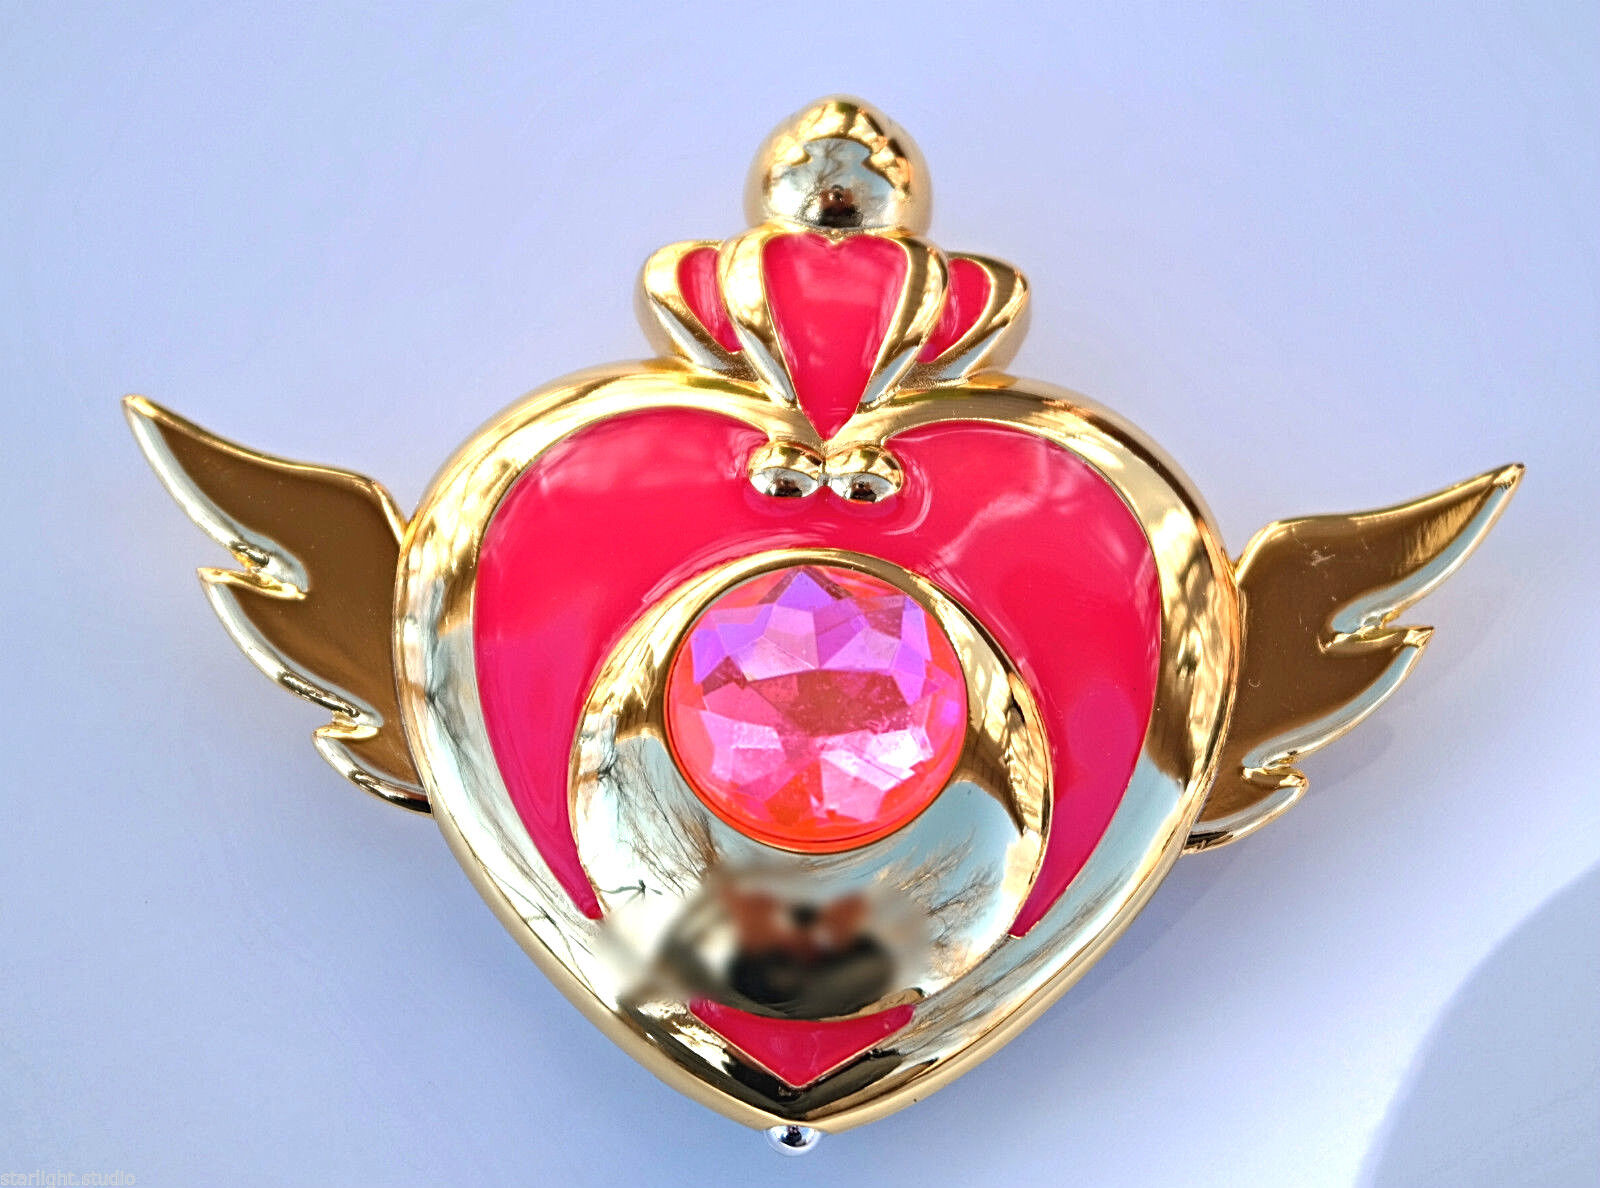 Sailor Moon Super S Crises Heart Compact Mirror Brooch Locket Cosplay Doll Prop